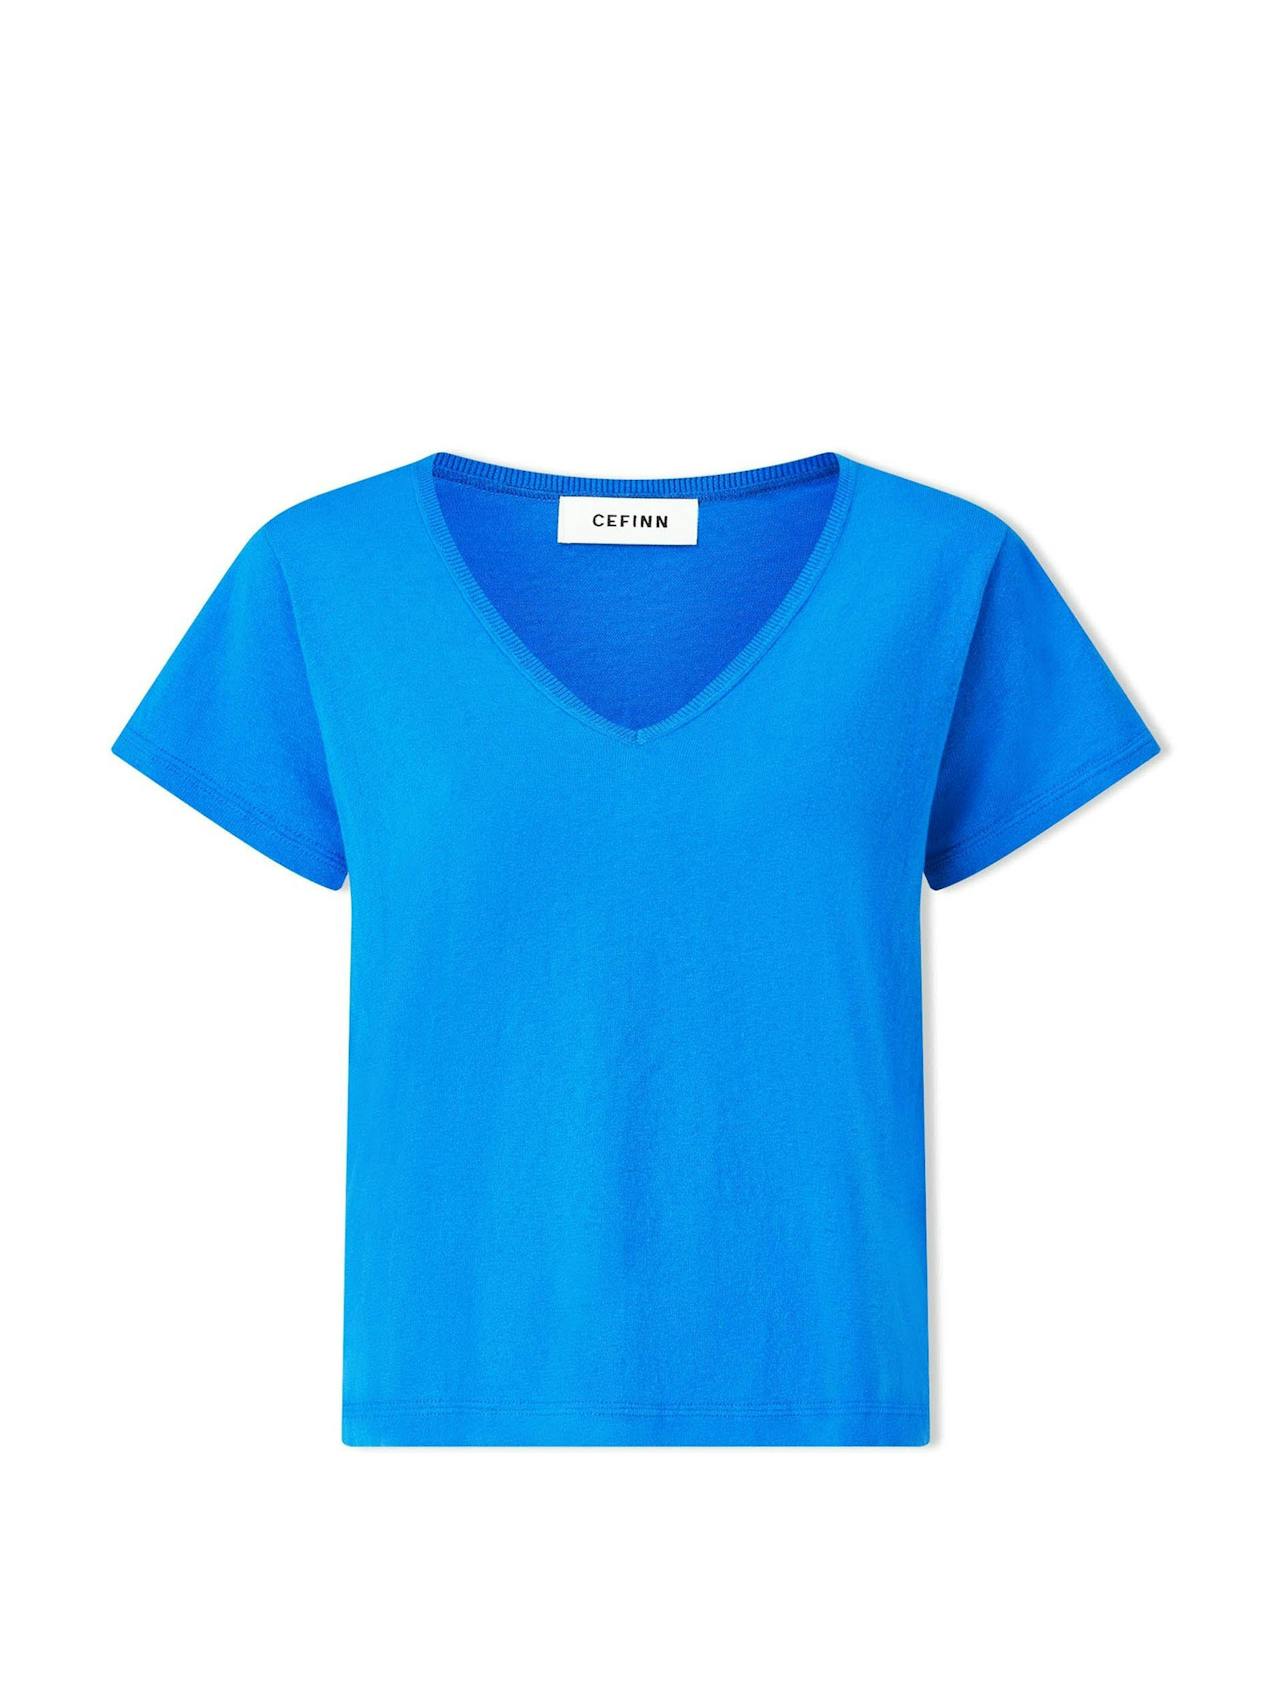 Bright blue Madison linen blend v neck knit t-shirt